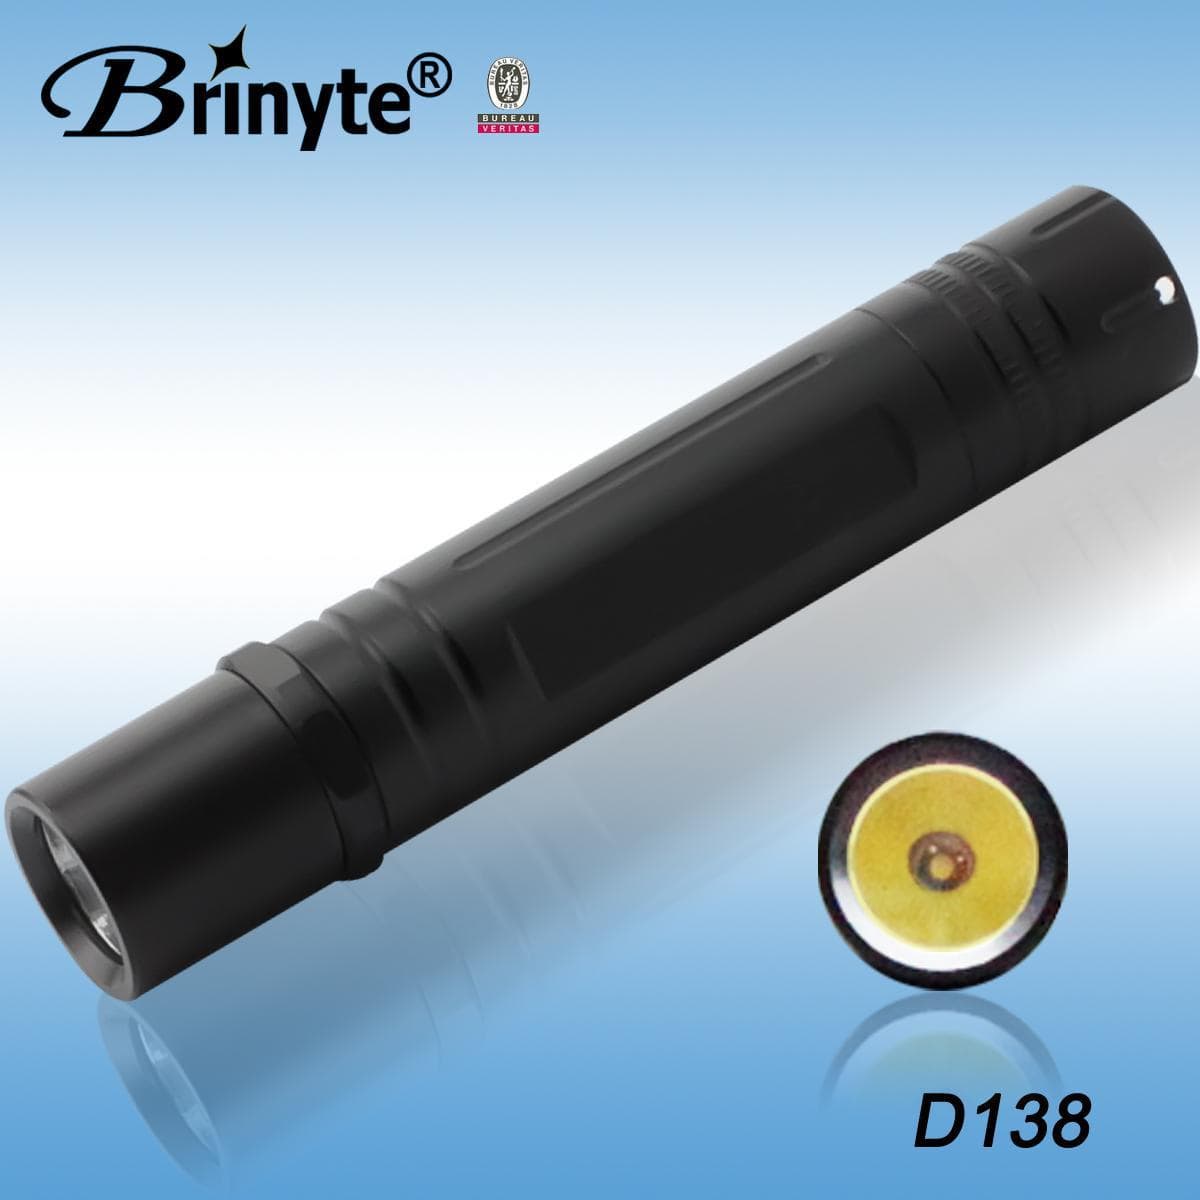 Brinyte D138 Cree XML U2 Portable  LED Camping Flashlight